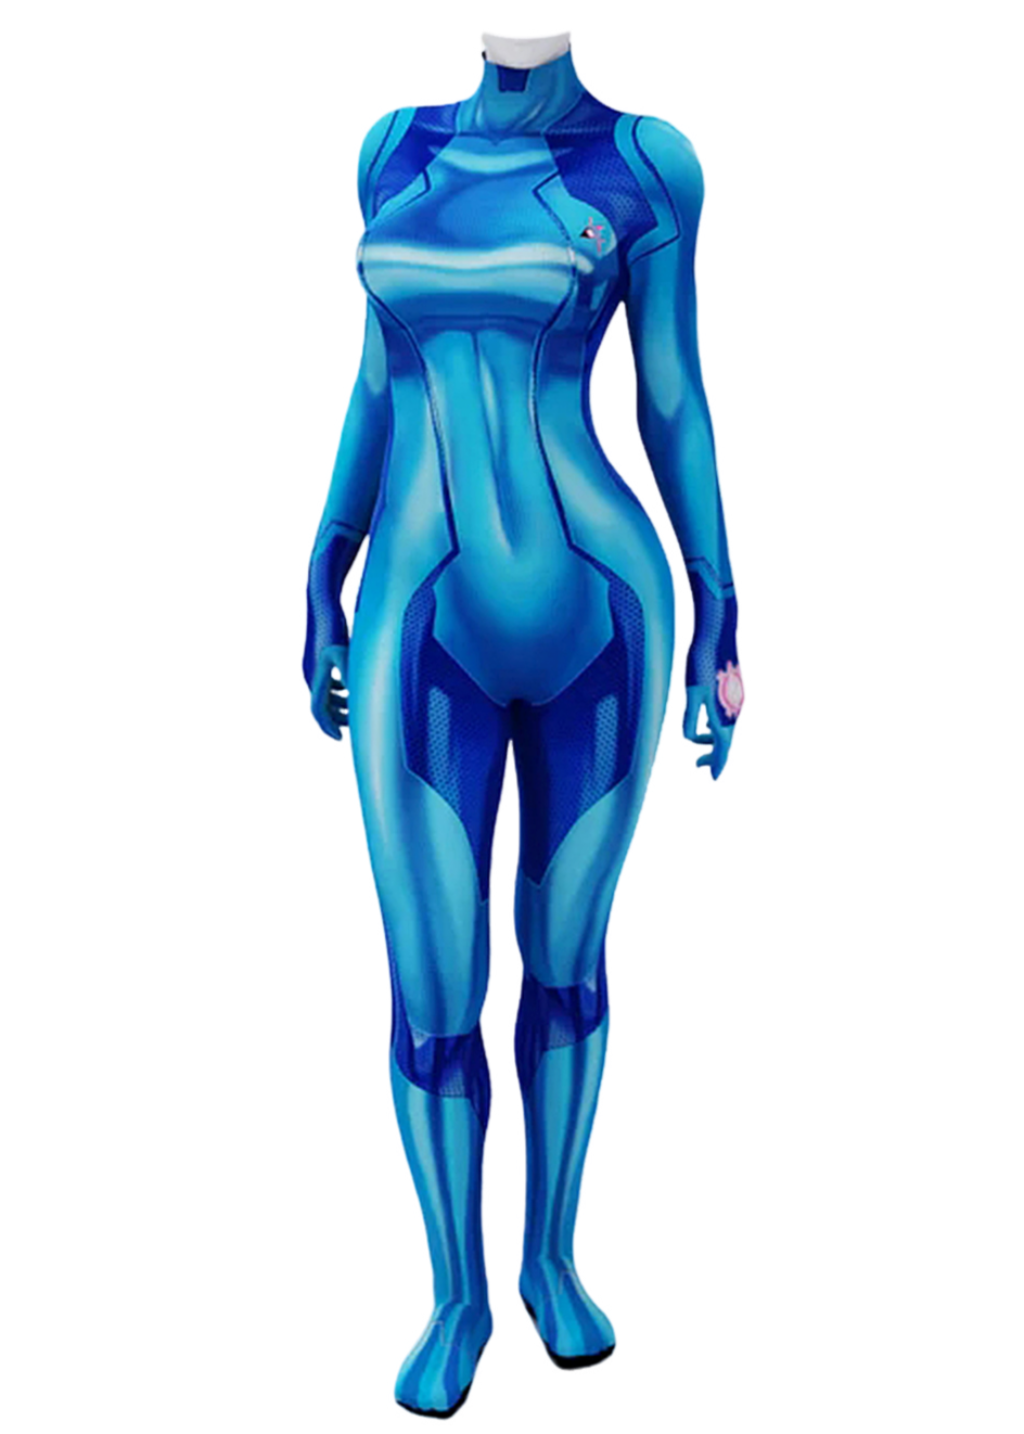 Metroid Costume Samus Aran Bodysuit Cosplay for Adult Kids